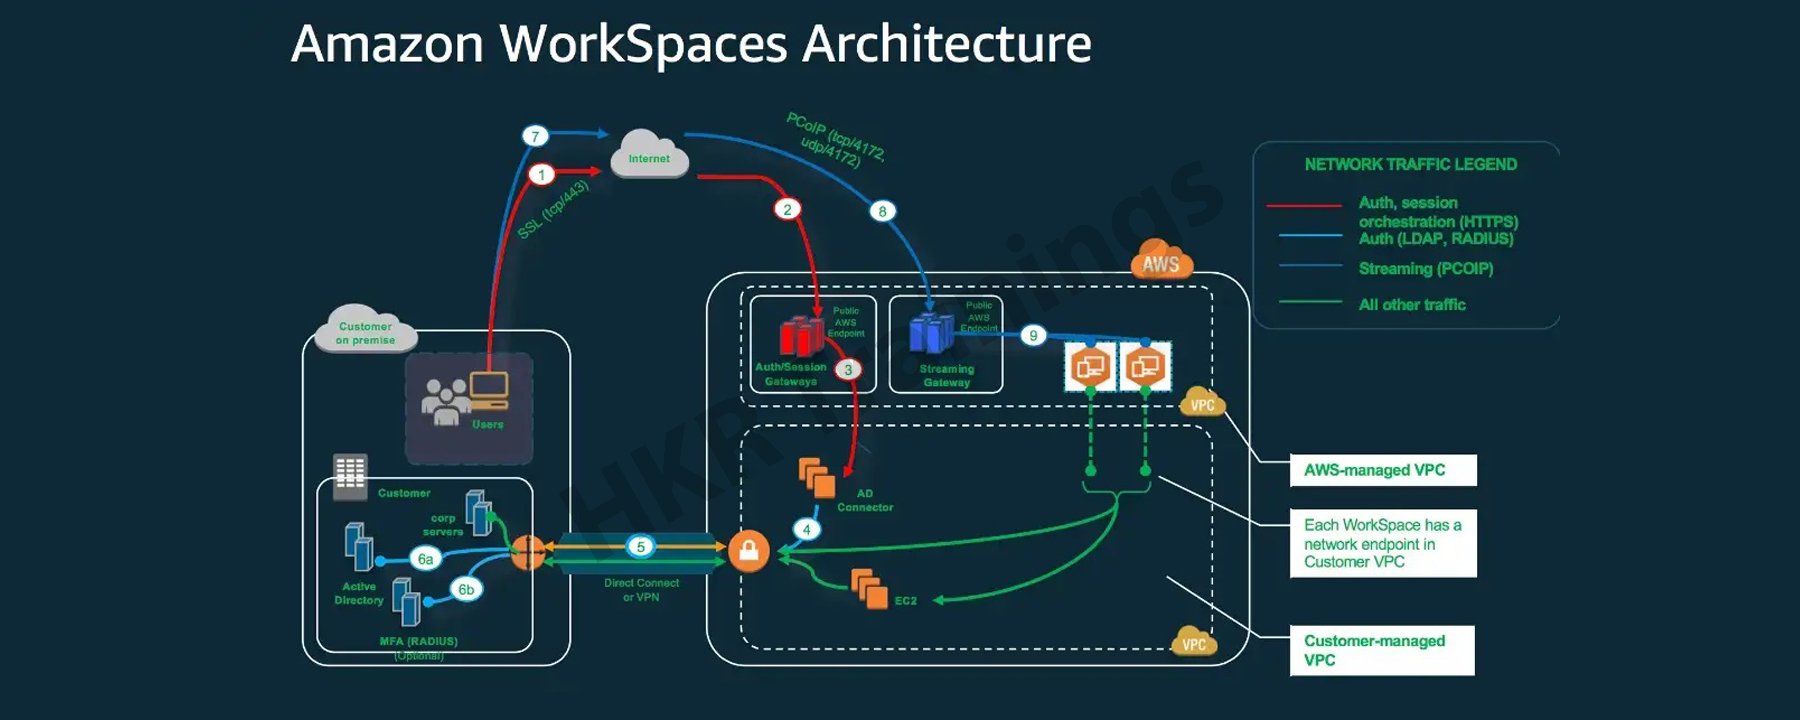 Amazon workspace Architecture